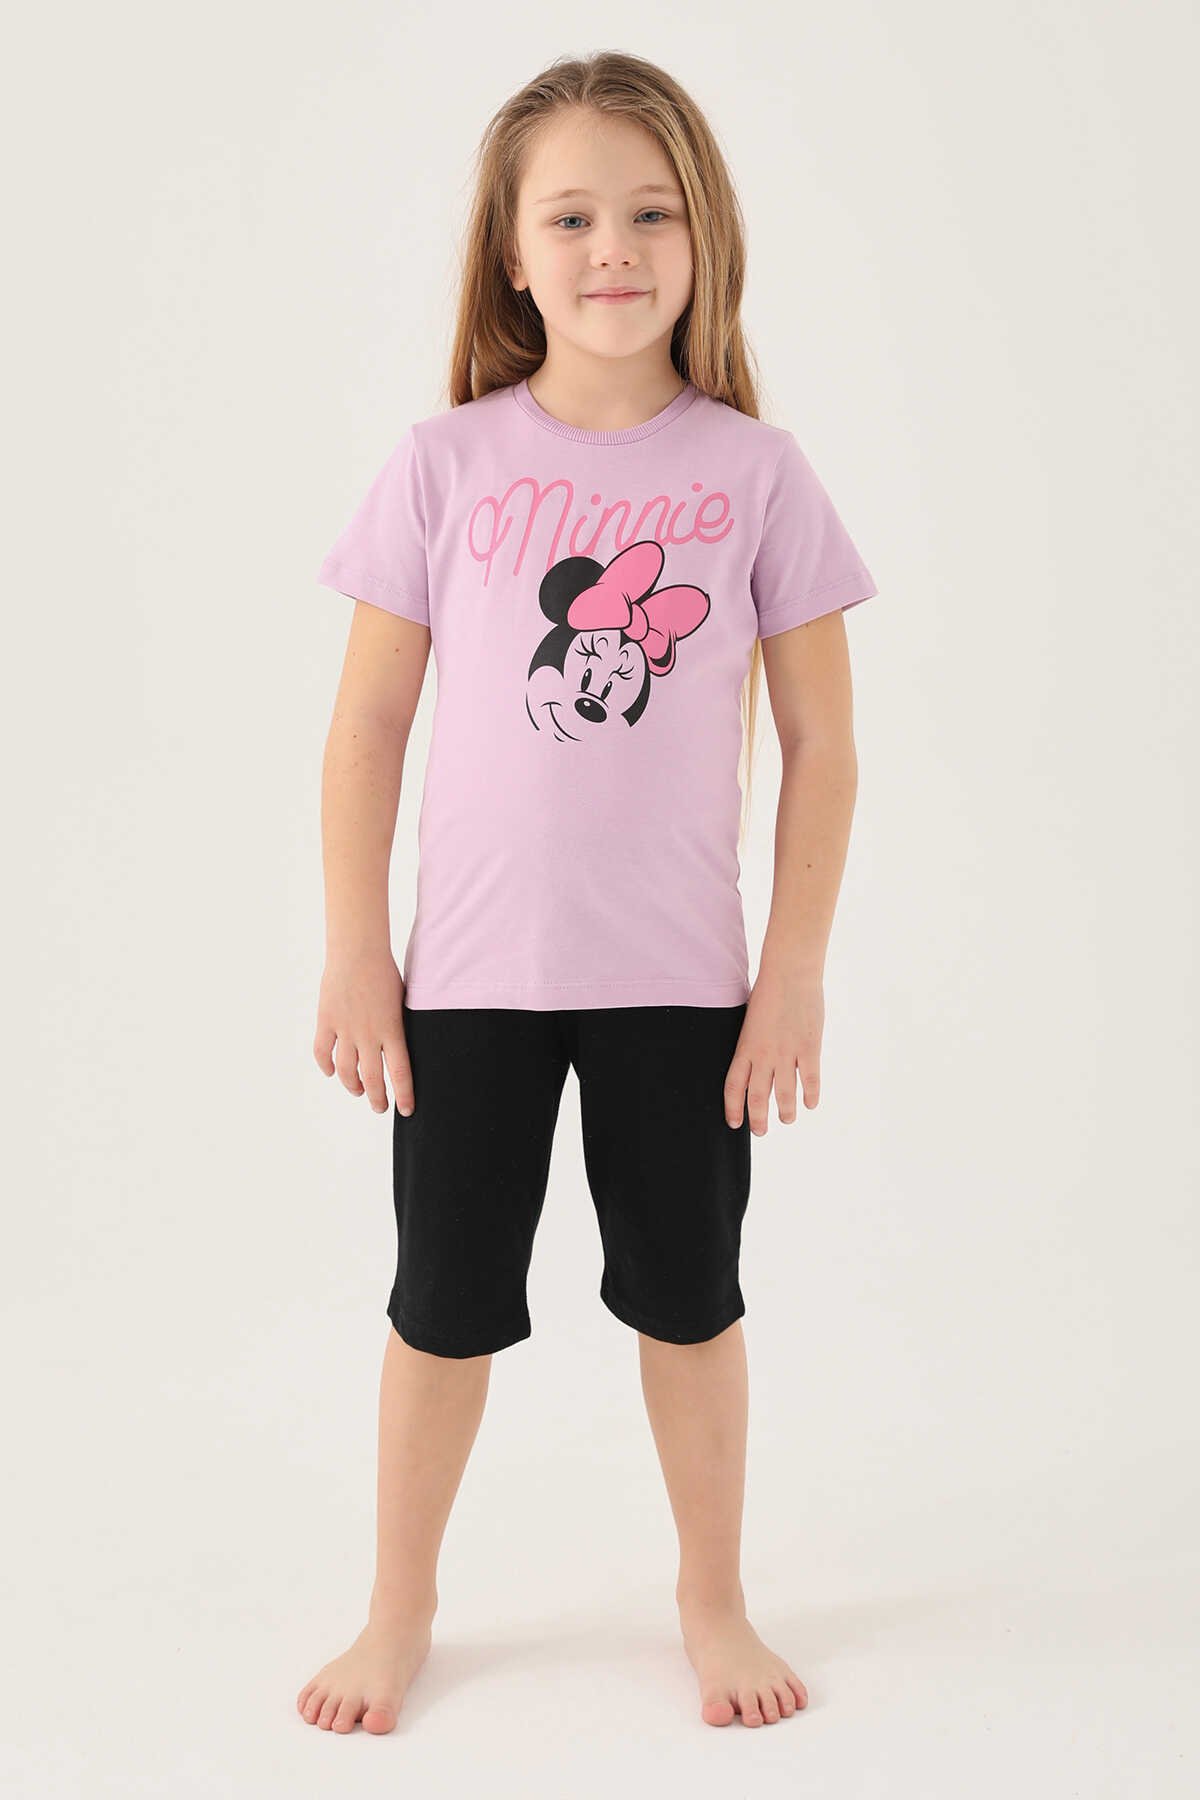 Minnie Mouse - Minnie Mouse D4805-2 Kız Çocuk T-Shirt Mor